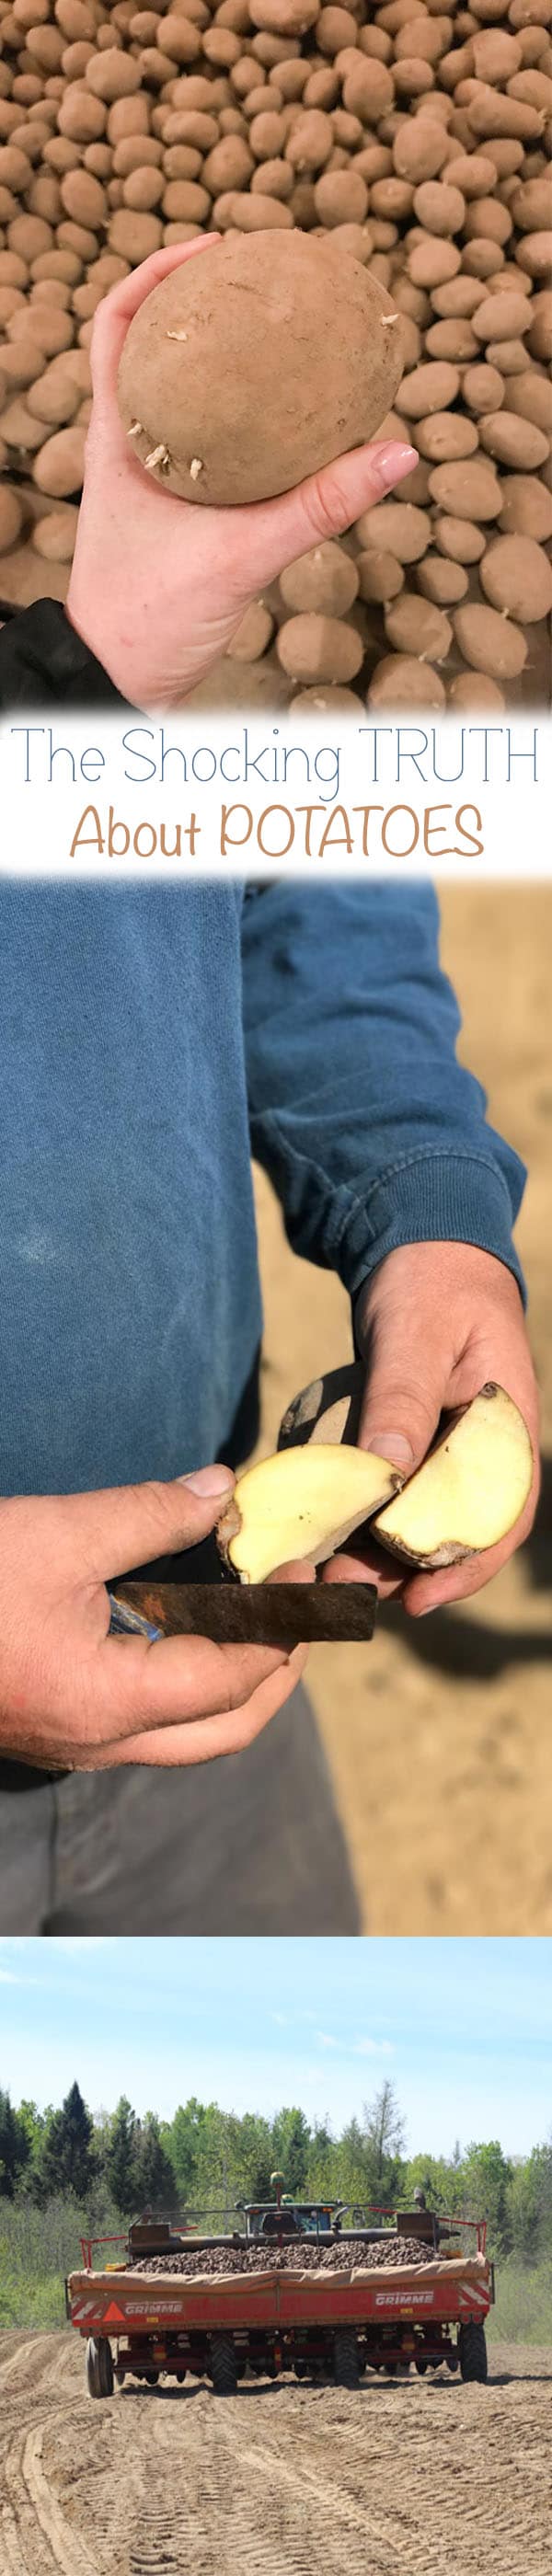 A man slicing a potato in half.